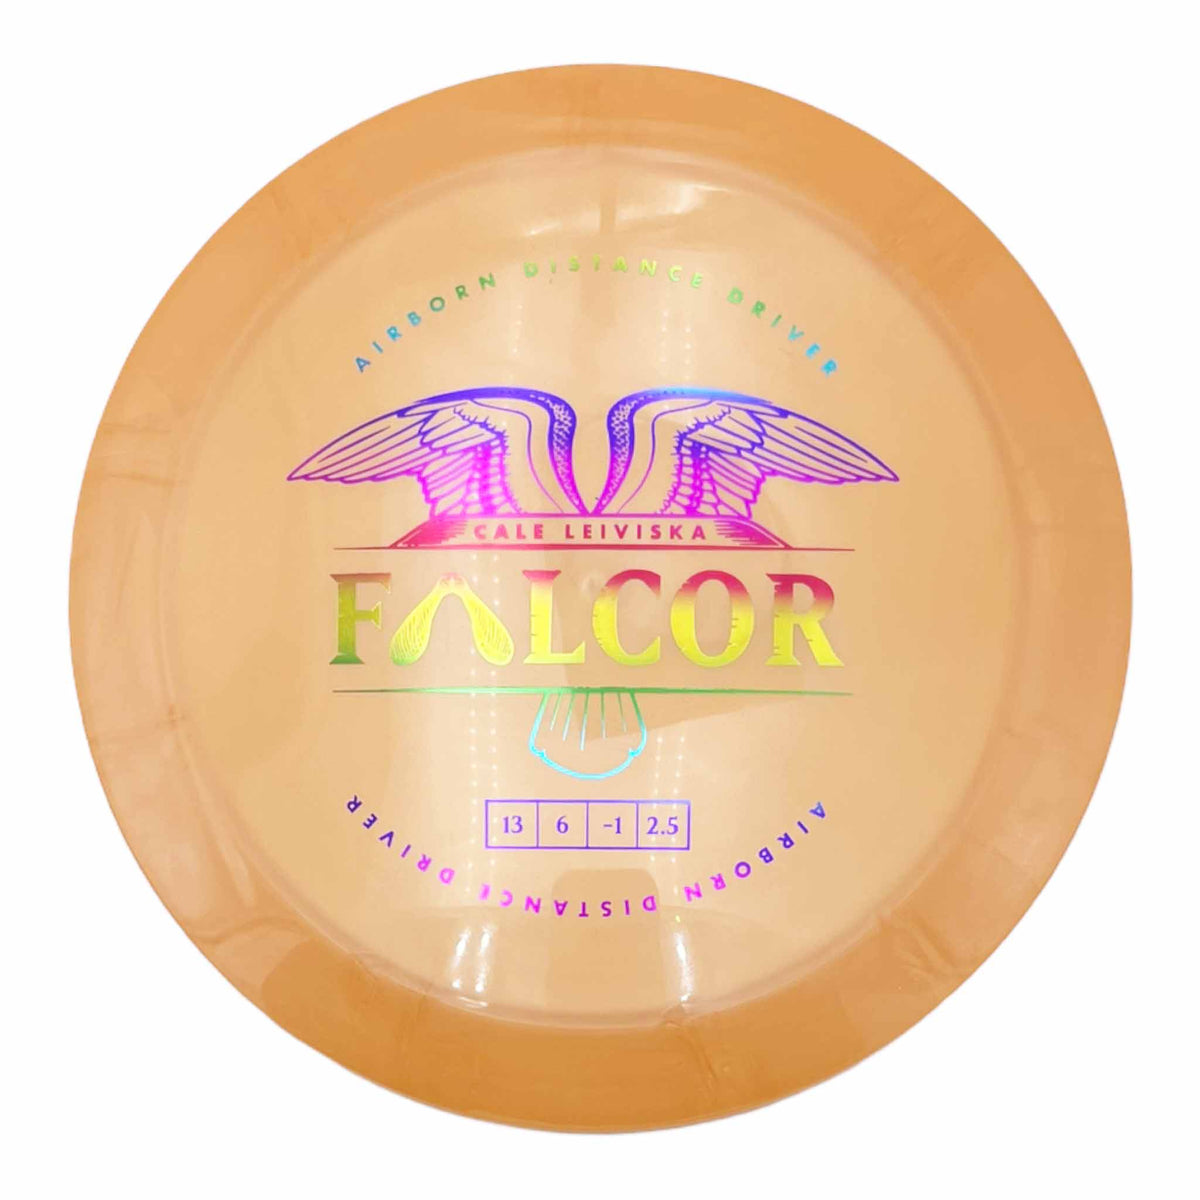 Prodigy 500 Airborn Falcor distance driver - Orange / Rainbow